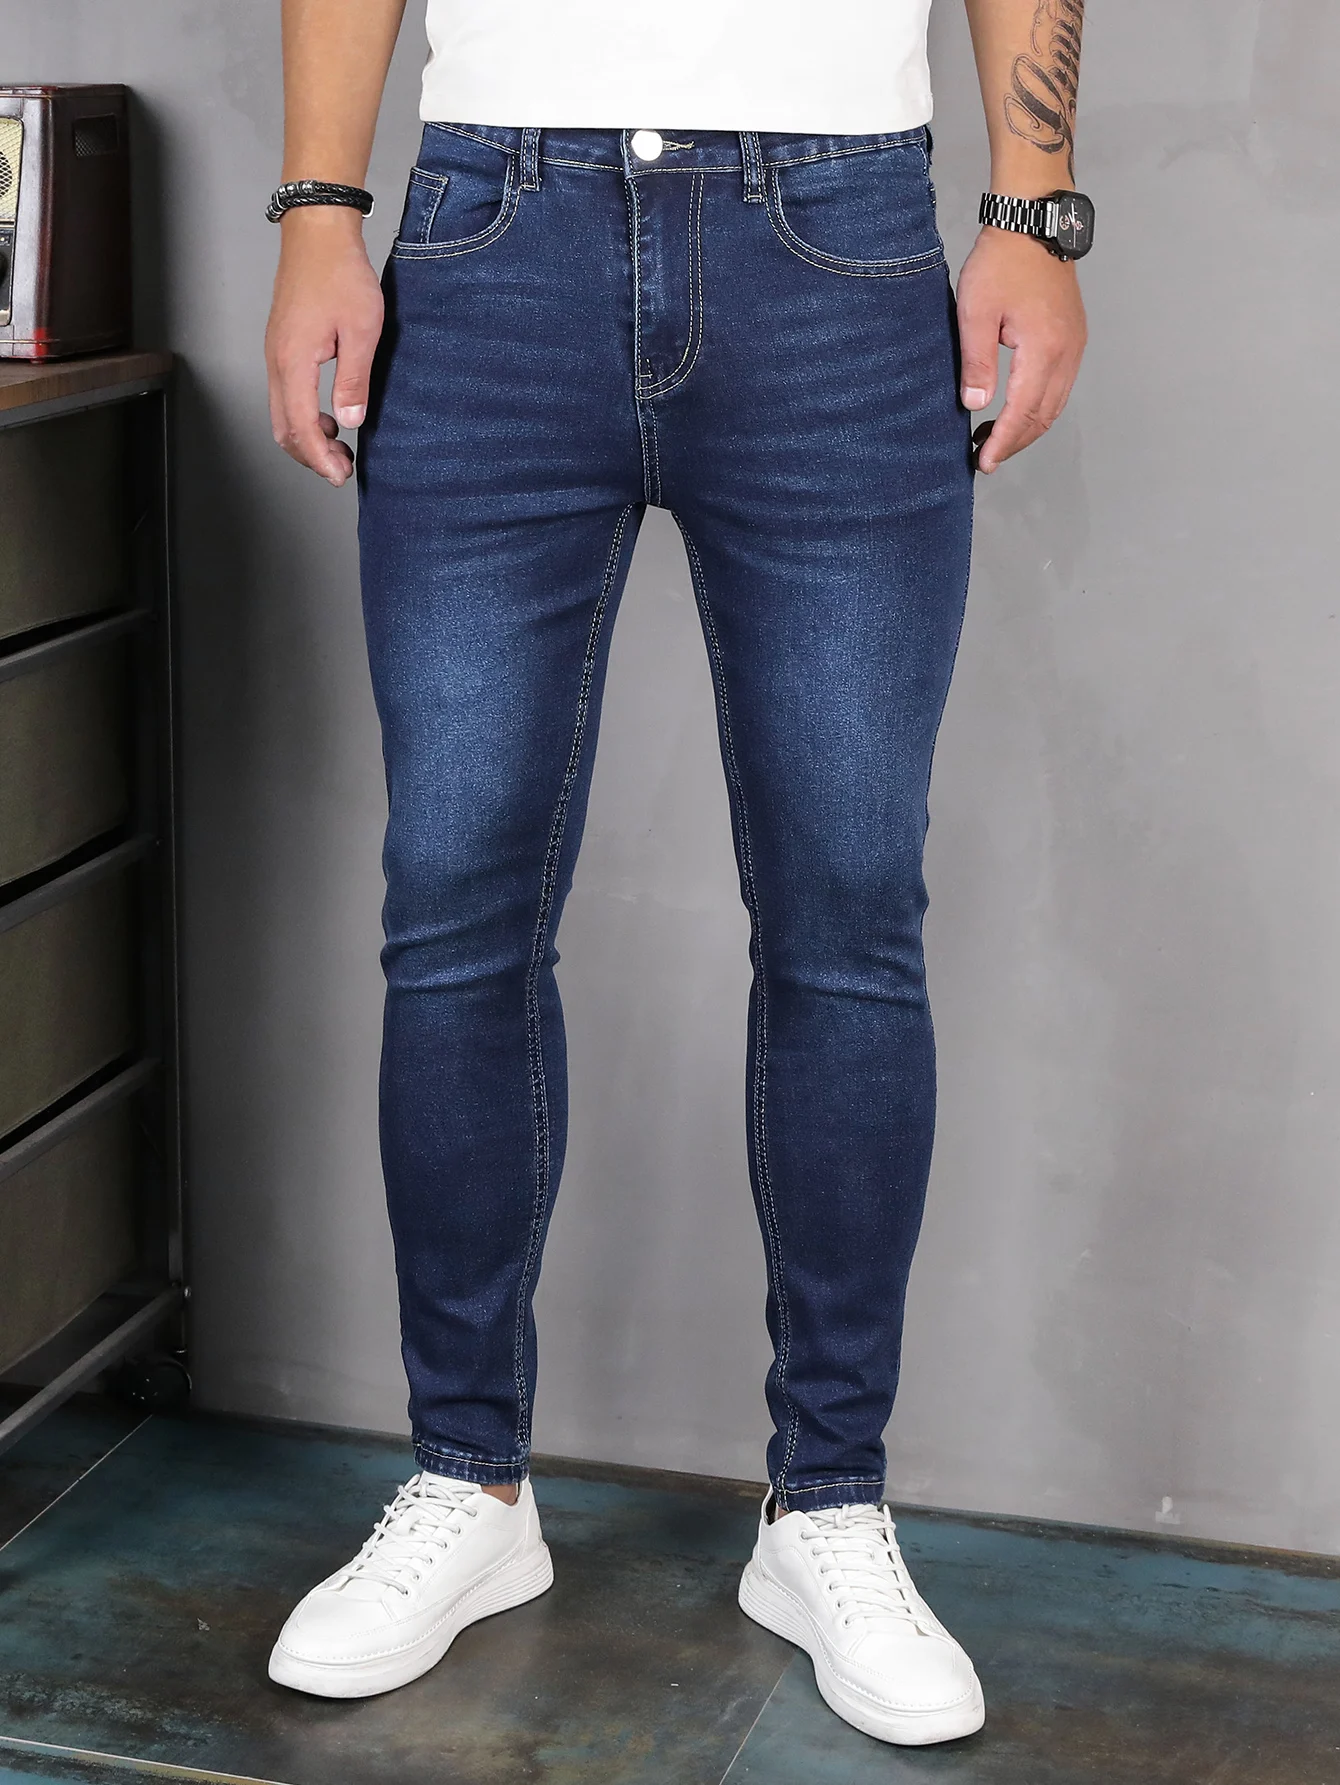 Casual New Men's Jeans Fashion Sports Men's Jeans y2k Four Seasons Blue Straight Stretch Pants Zipper Slim Fit Pants Men джинсы